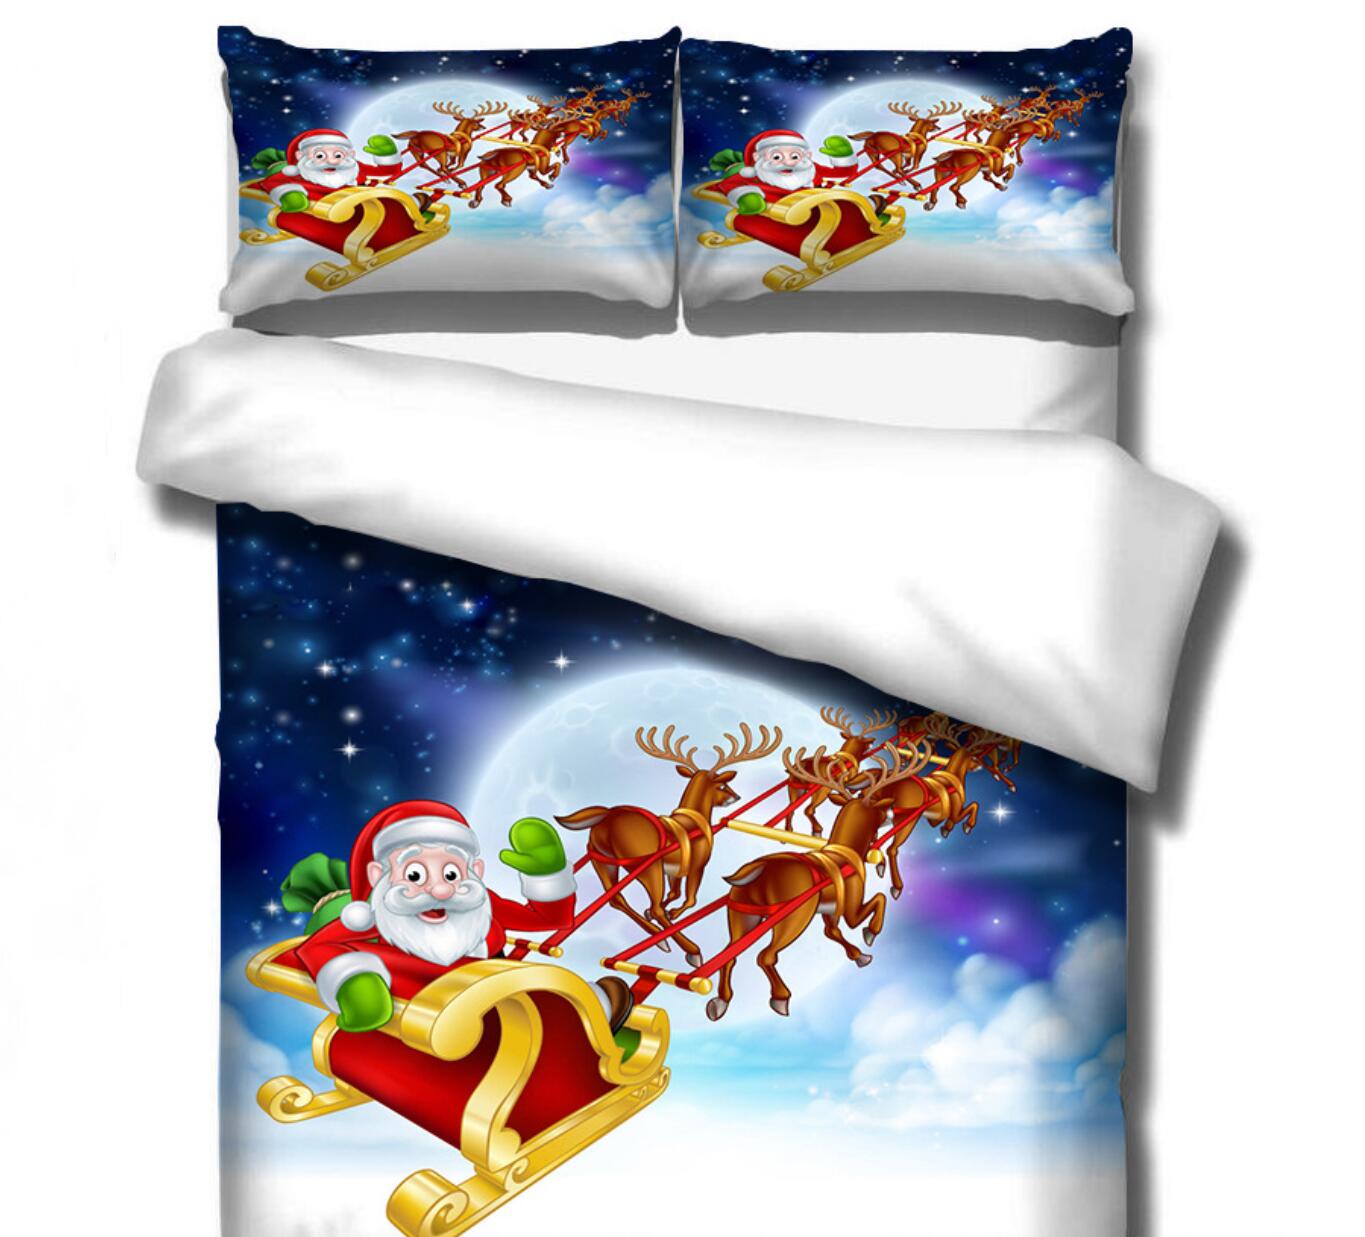 3D Santa Sleigh Deer 32125 Christmas Quilt Duvet Cover Xmas Bed Pillowcases